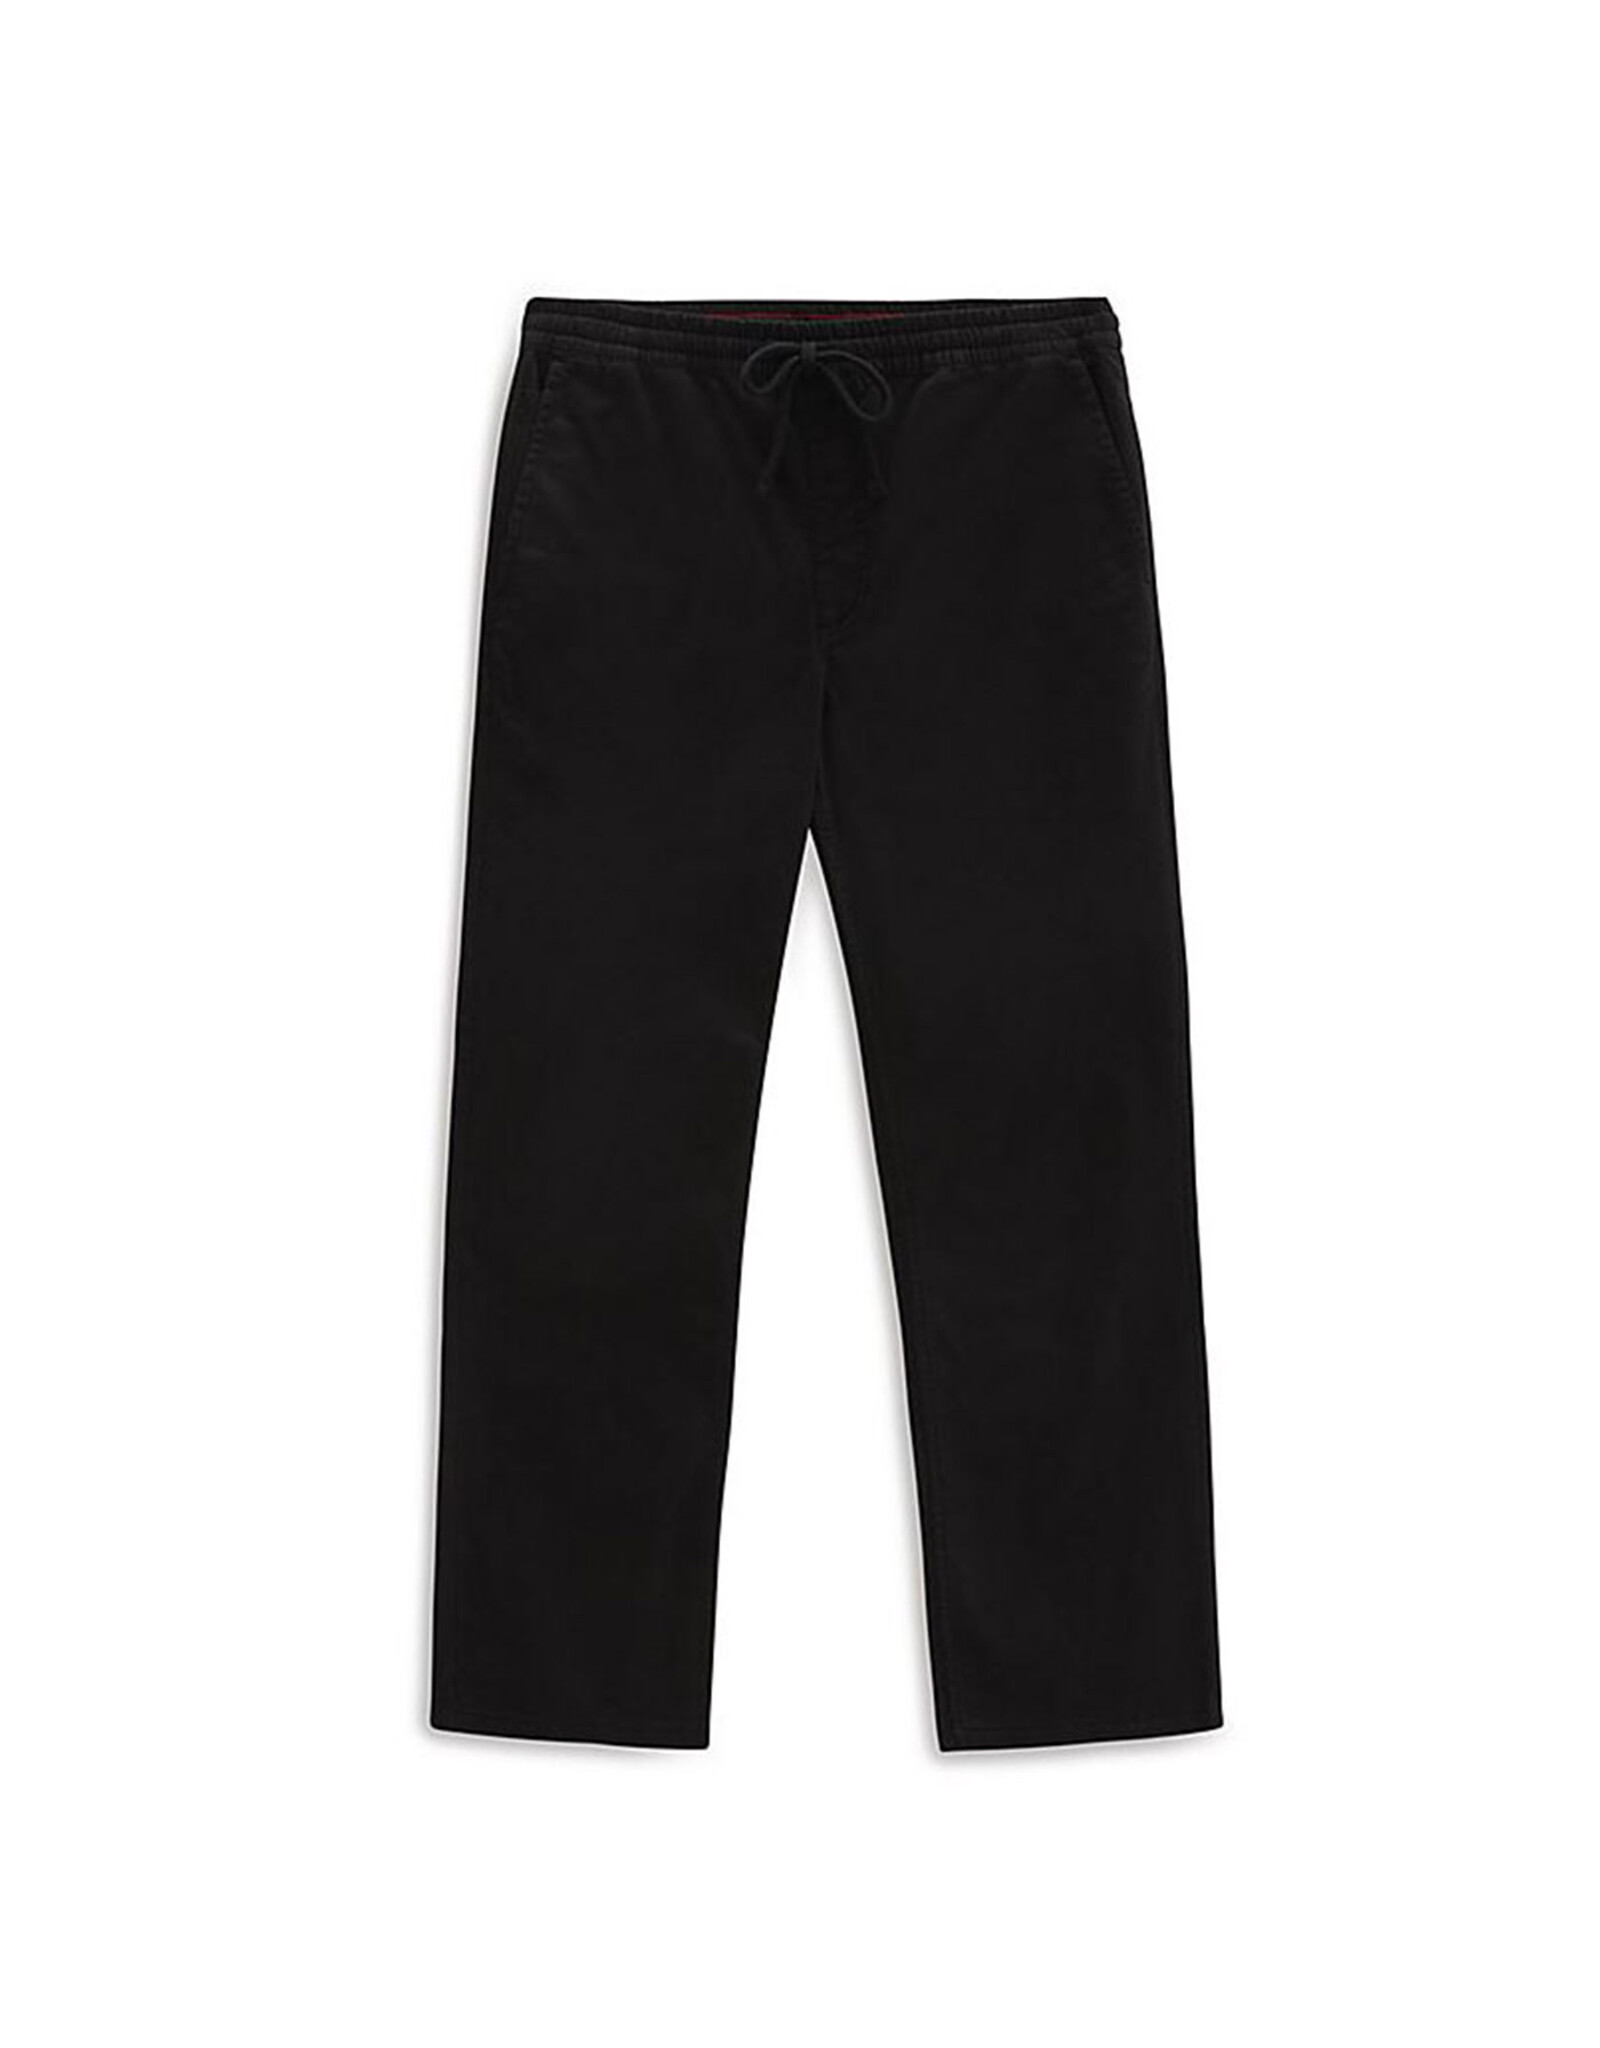 VANS Range Relaxed Elastic Pants Black - VN0A5FJJBLK